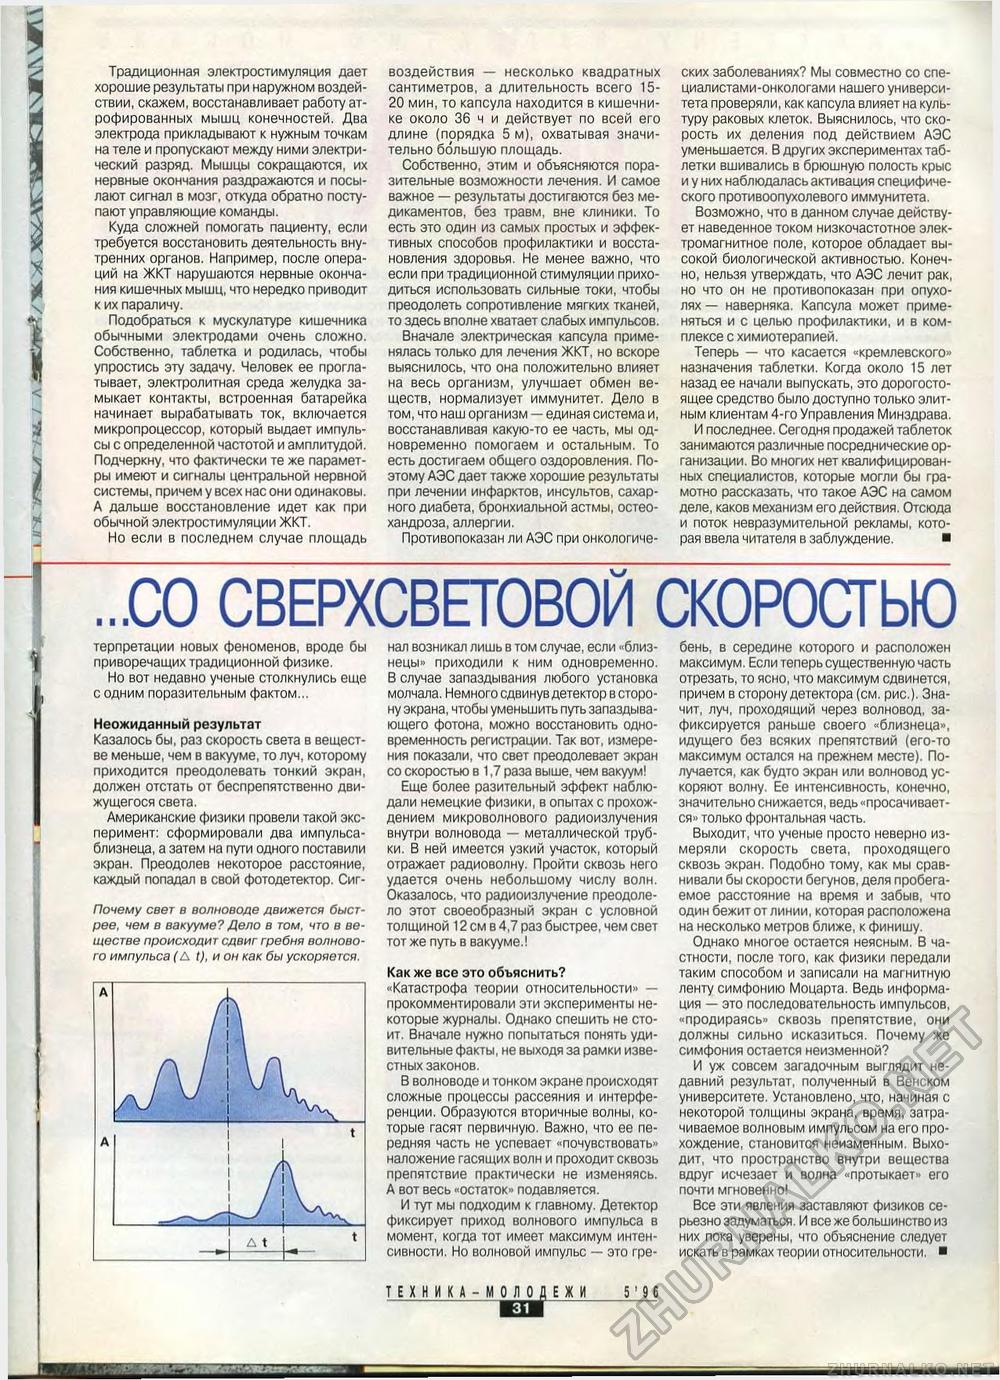 Техника - молодёжи 1996-05, страница 32